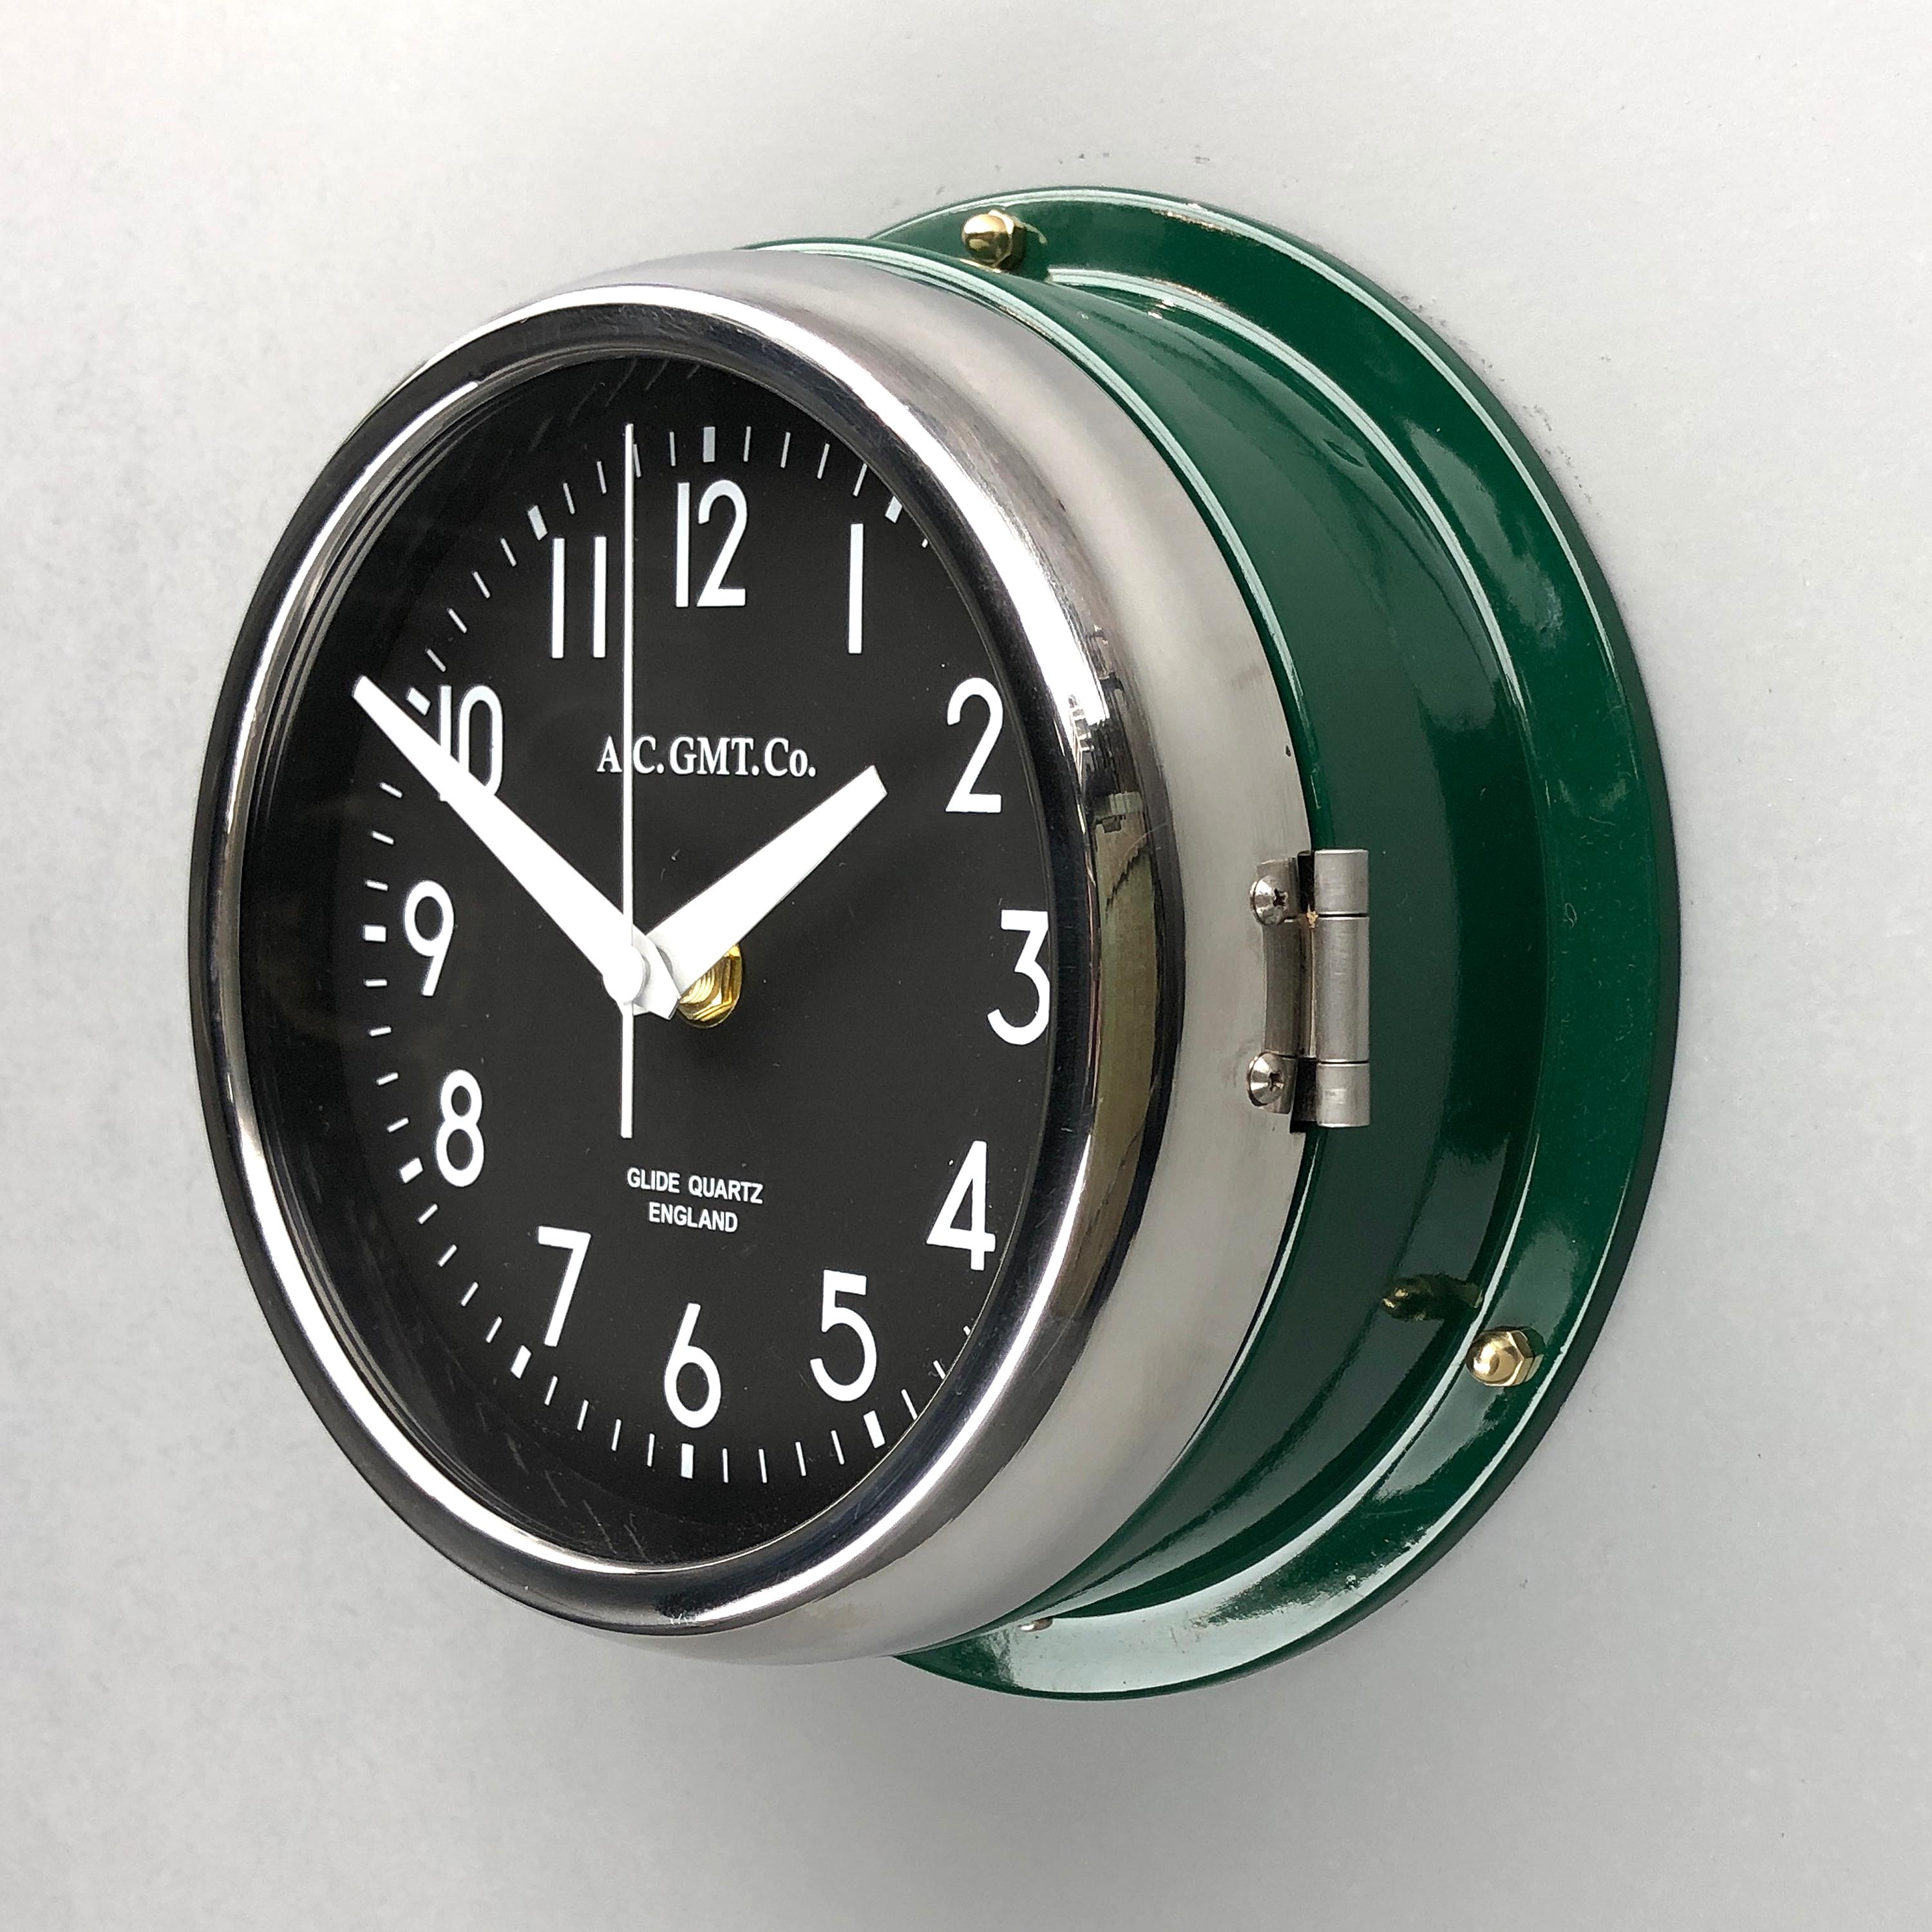 Steel 1970s British Racing Green AC.GMT.Co. Industrial Wall Clock Chrome Bezel 